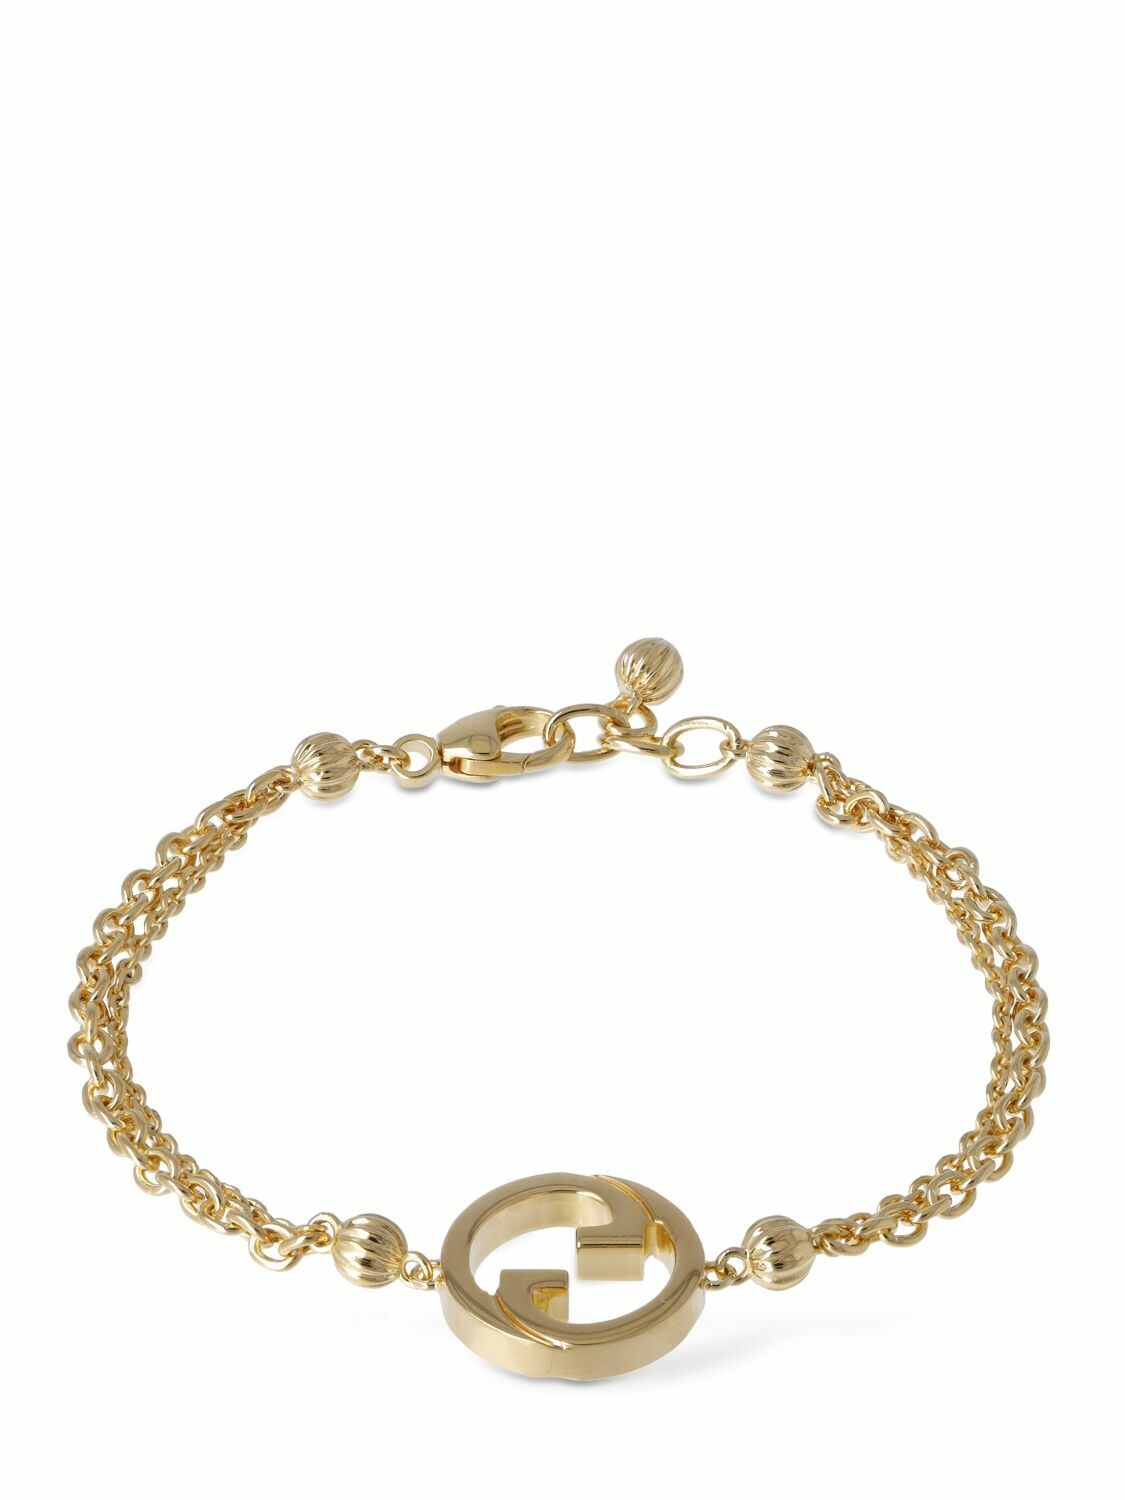 Photo: GUCCI - Gucci Blondie Brass Bracelet